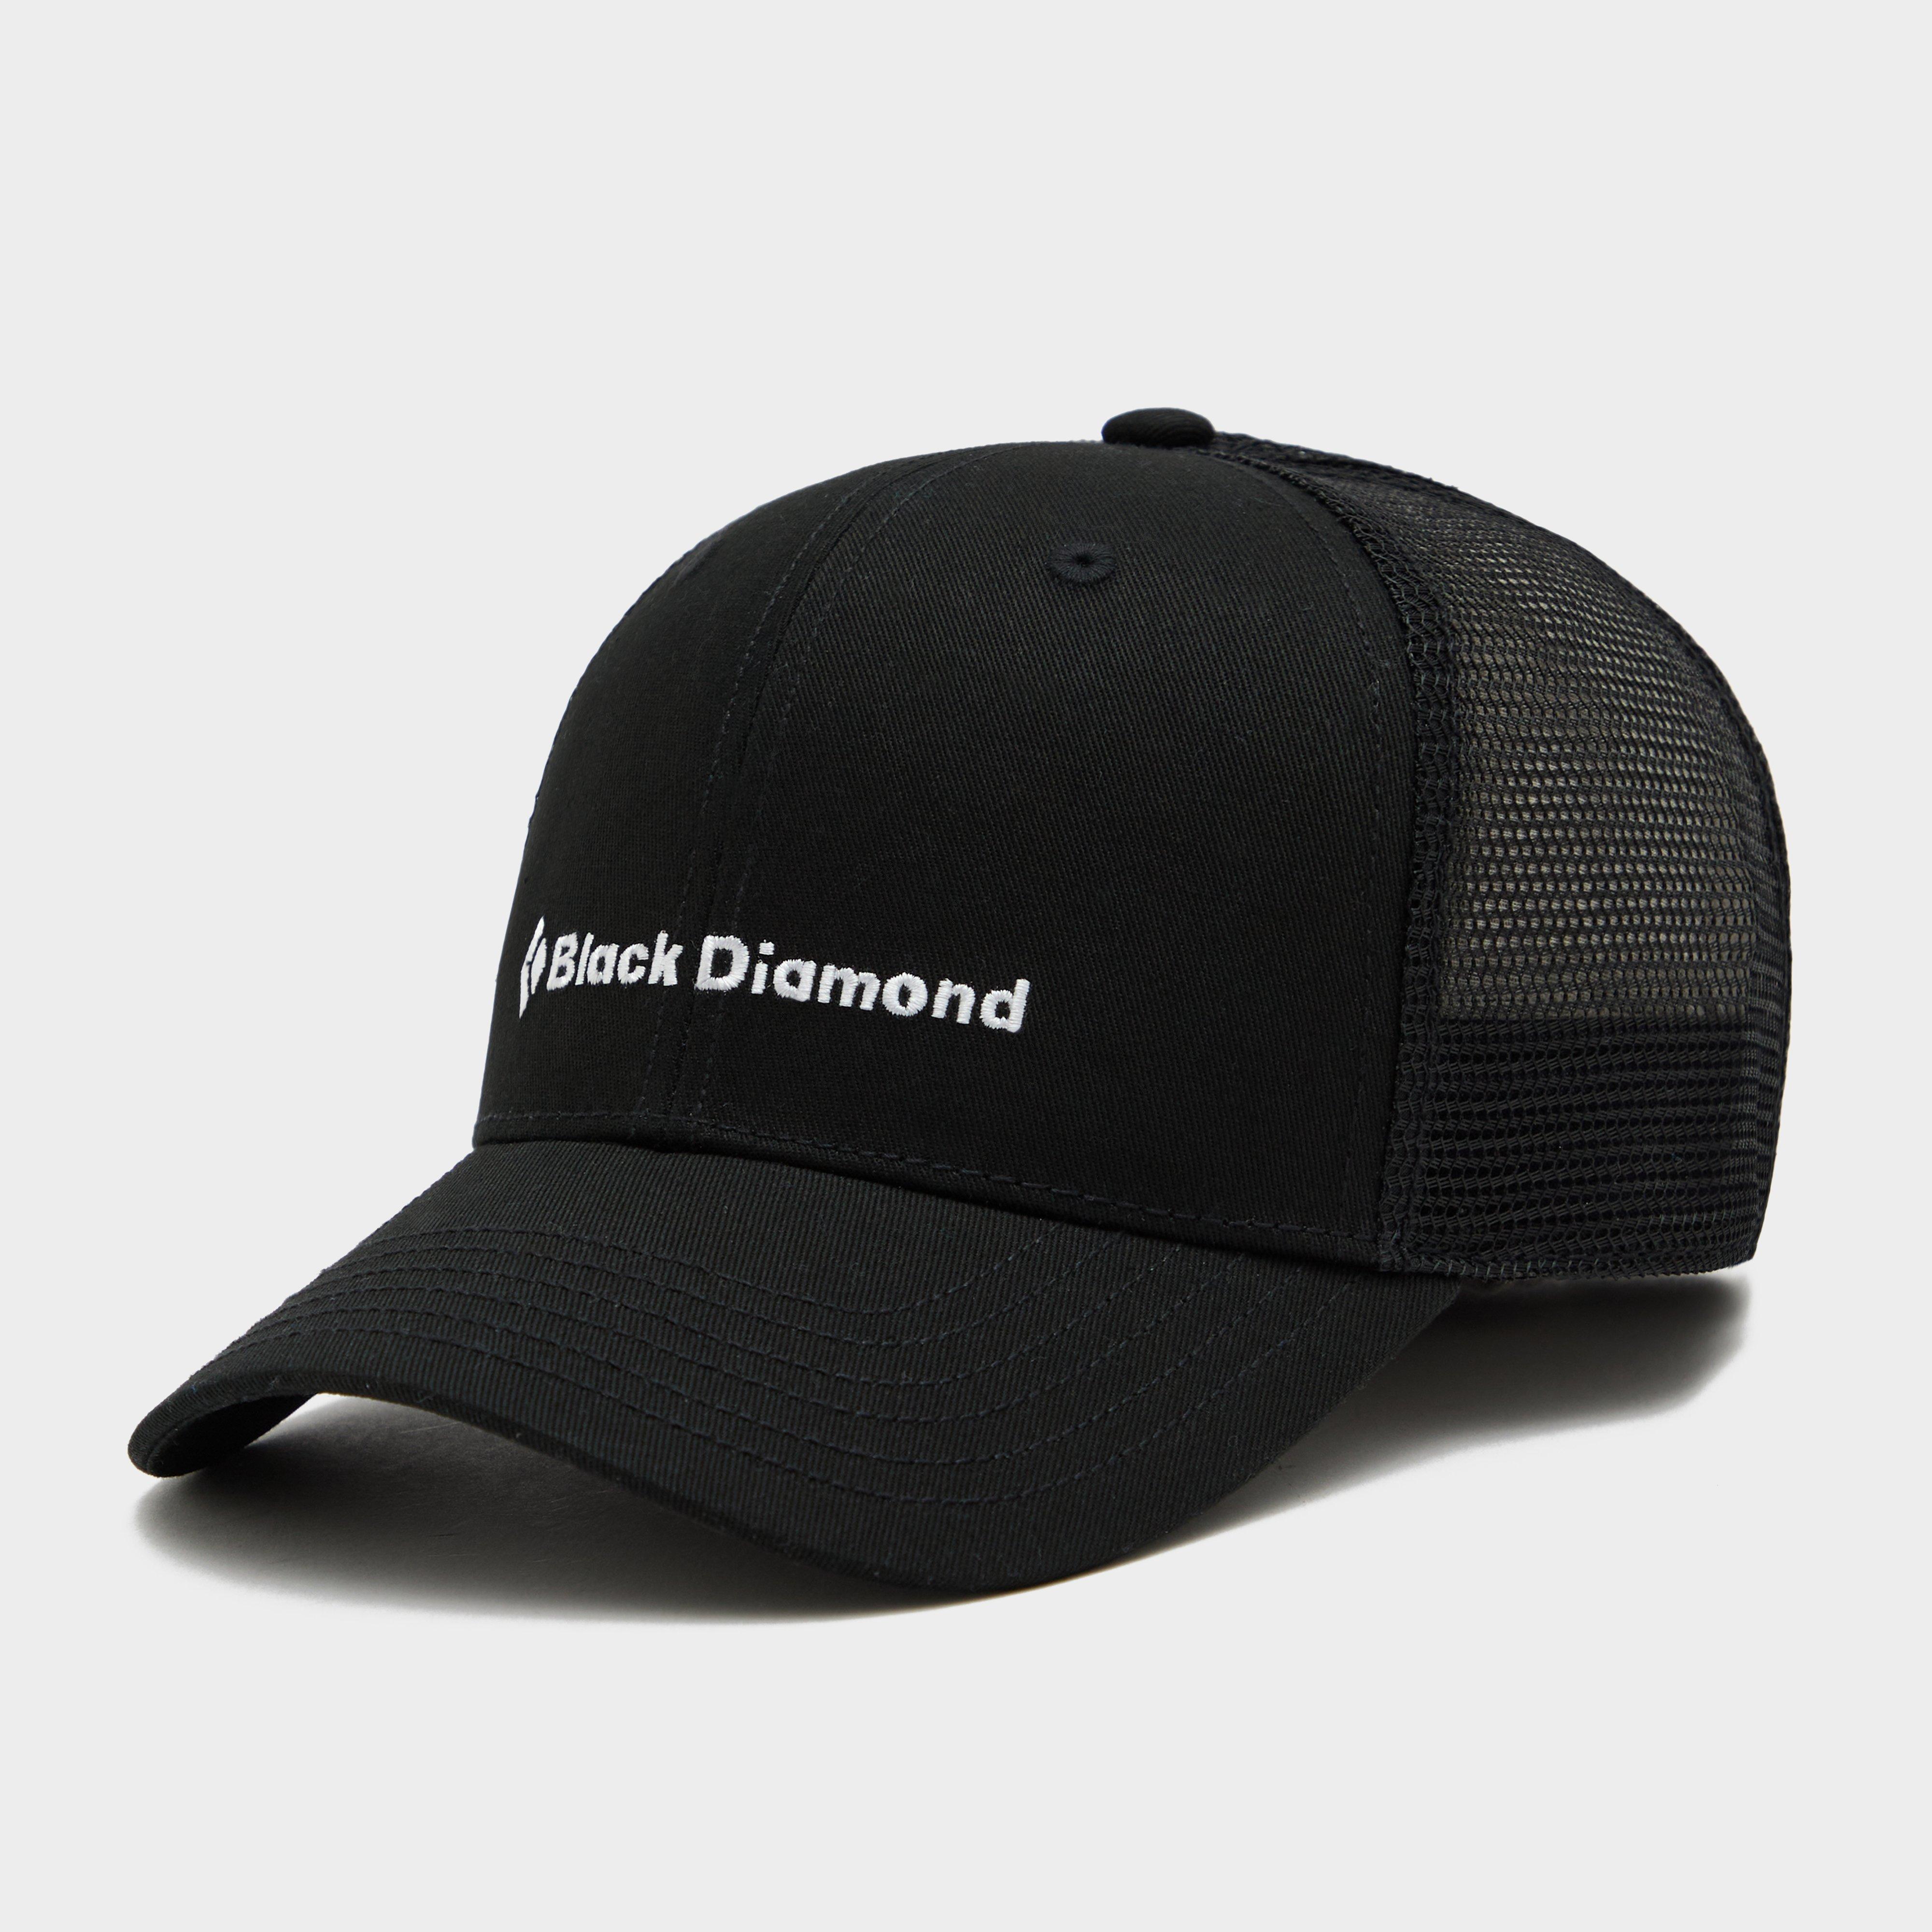  Black Diamond Trucker Cap, Black